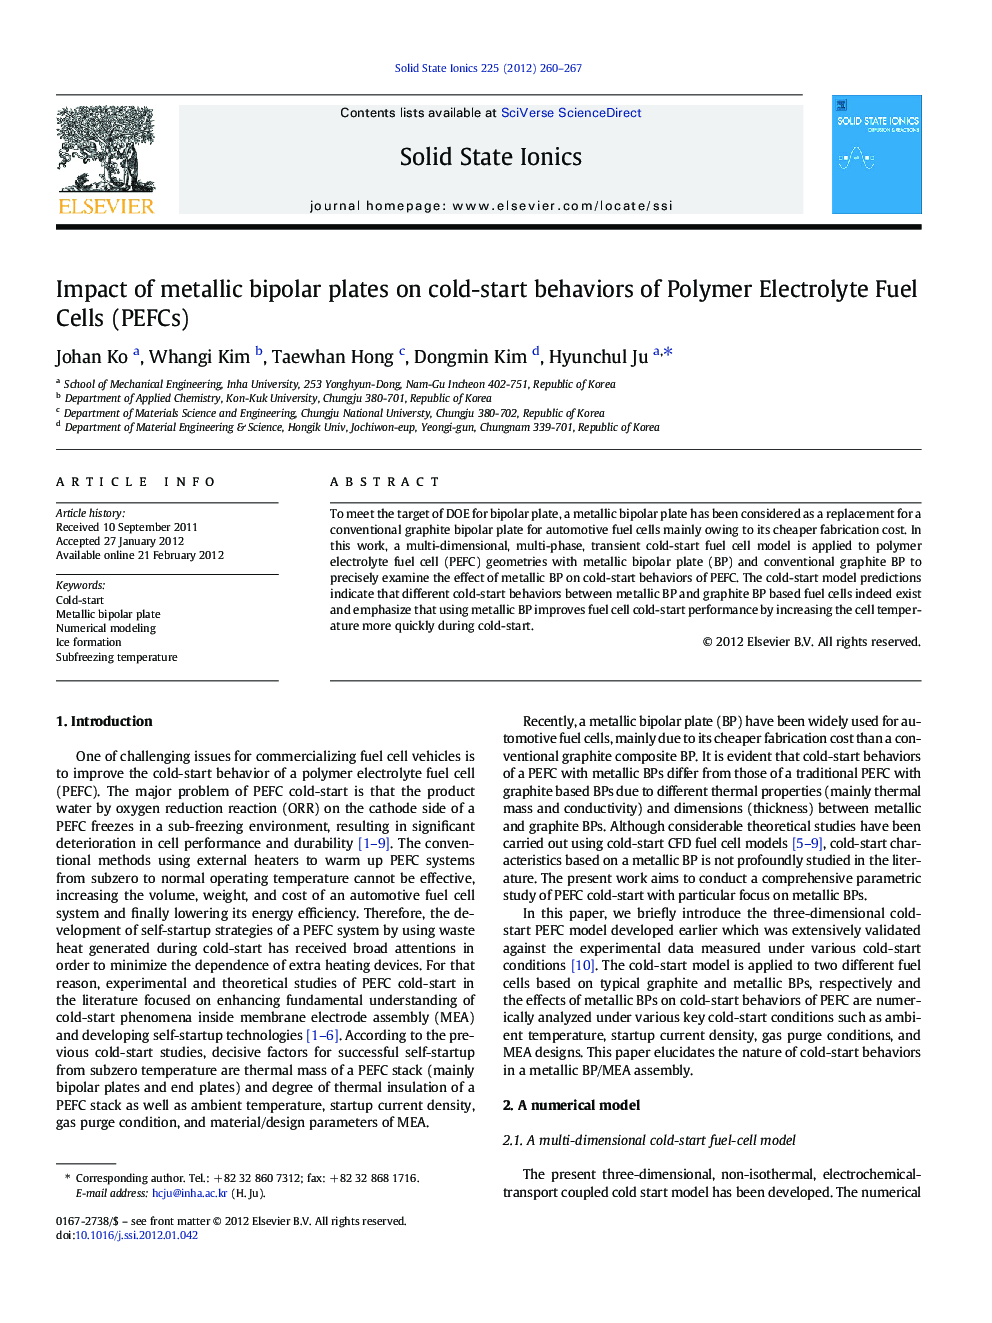 Impact of metallic bipolar plates on cold-start behaviors of Polymer Electrolyte Fuel Cells (PEFCs)